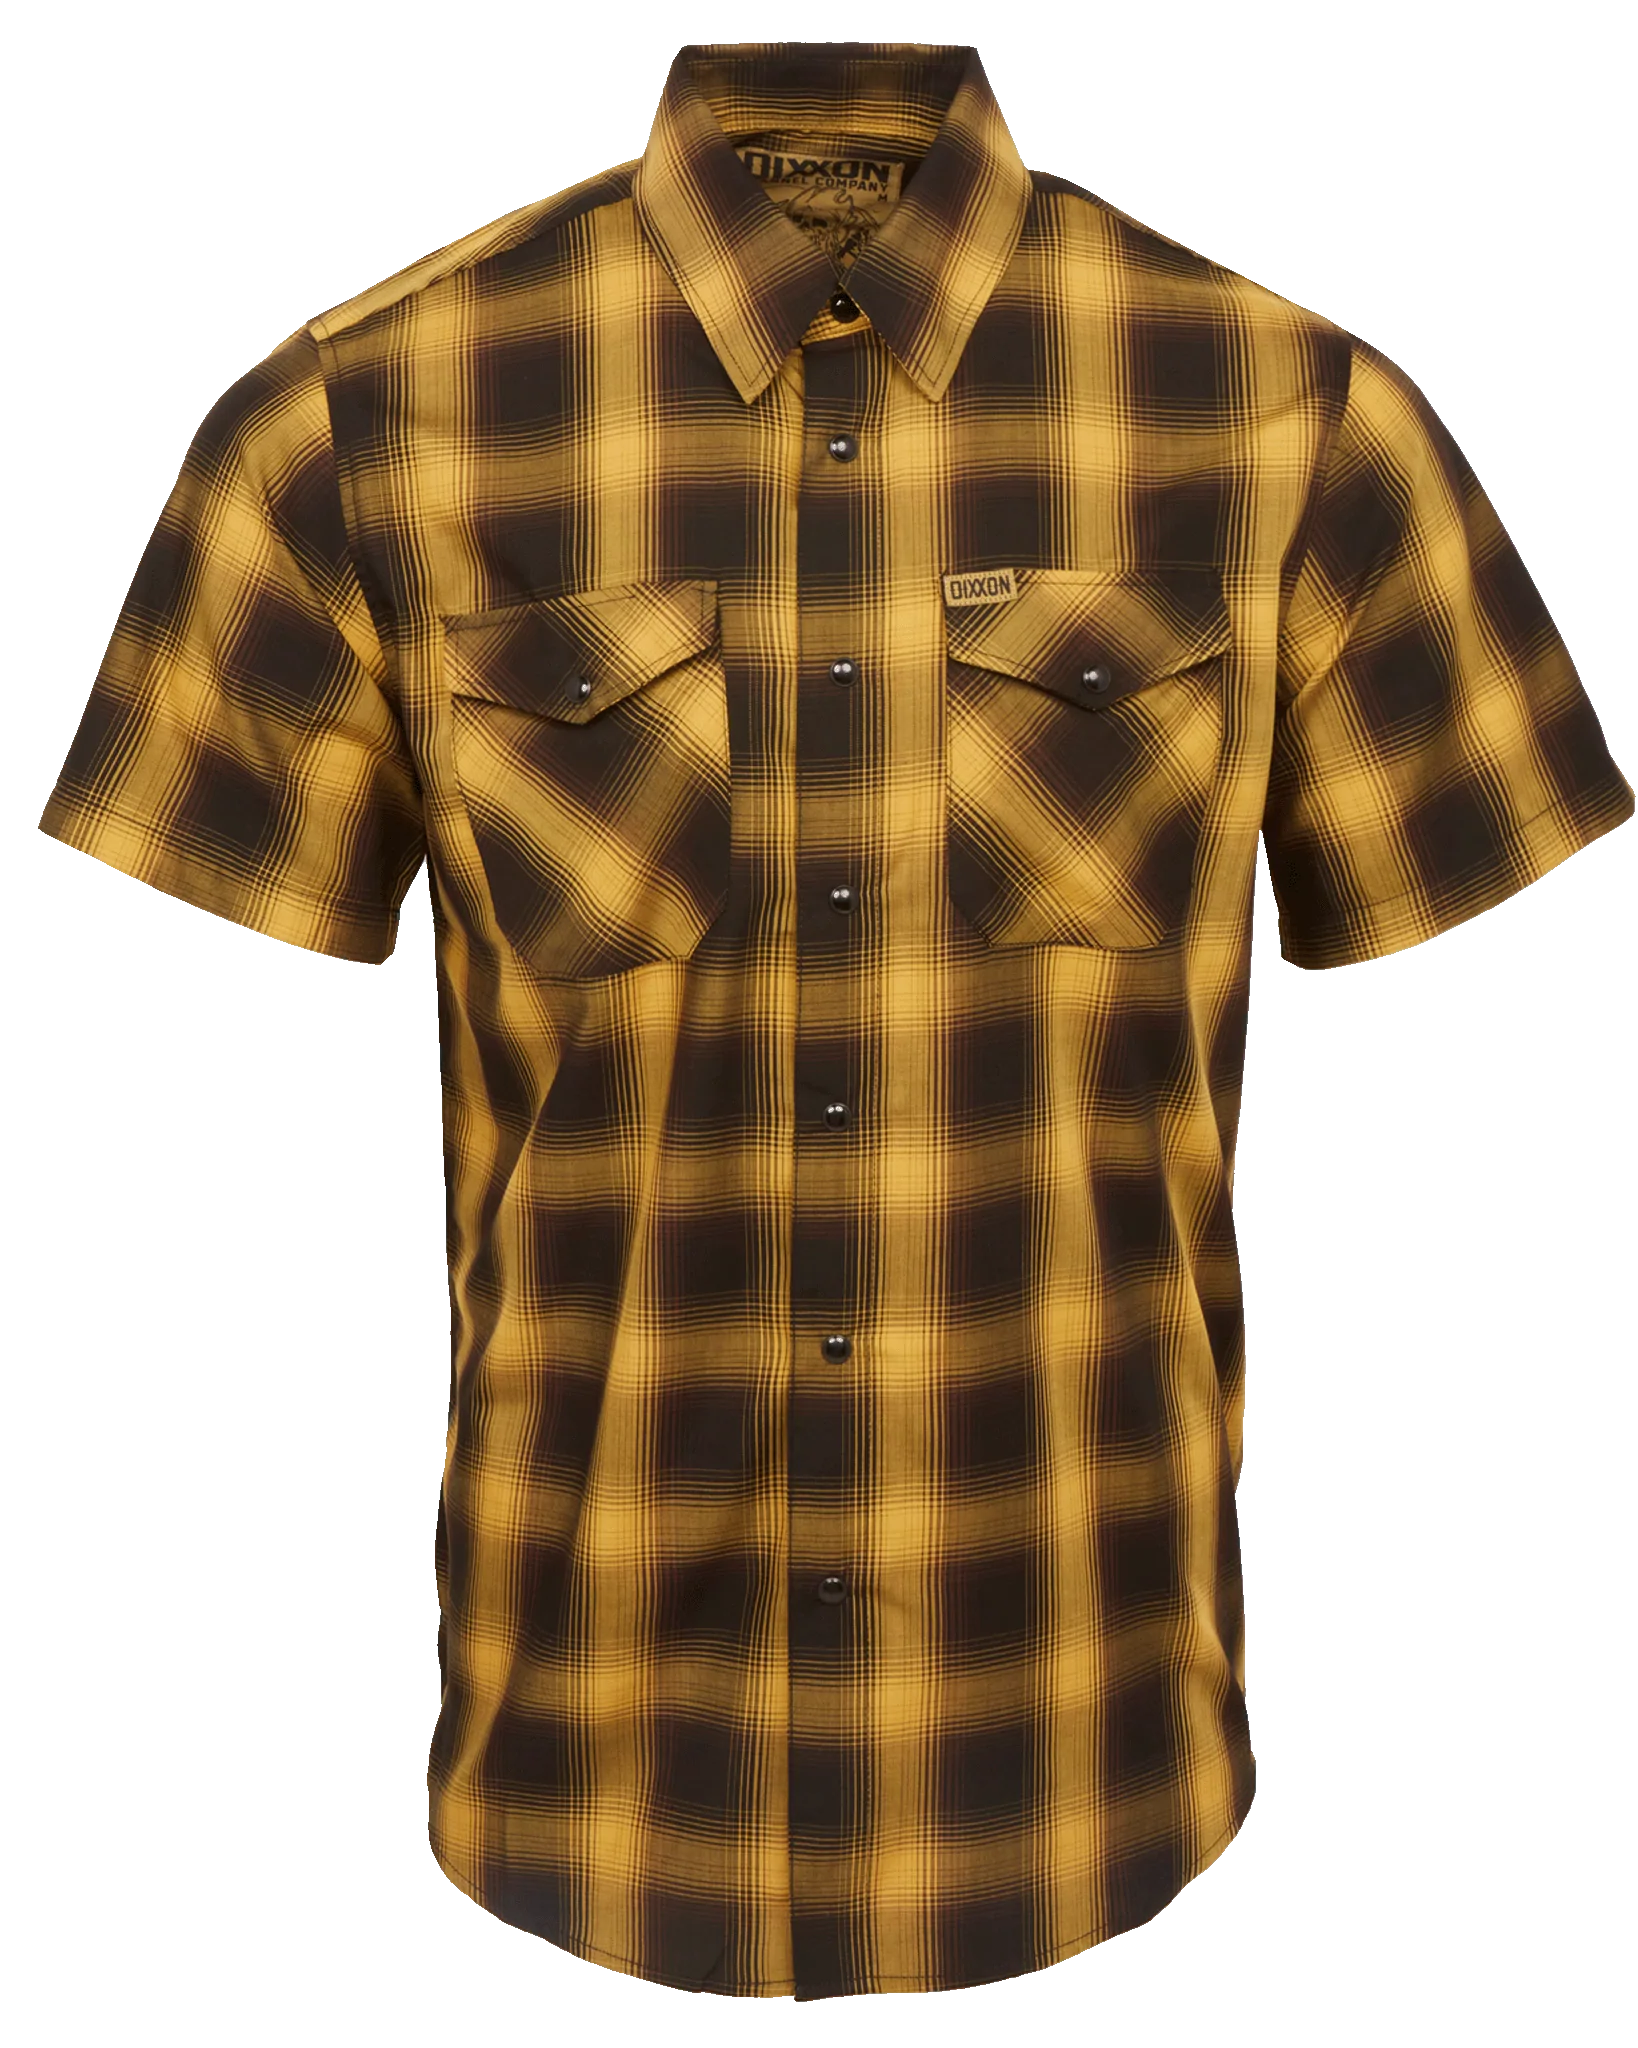 Gold Rush Dixxon Bamboo Shirt - Harley Davidson of Quantico